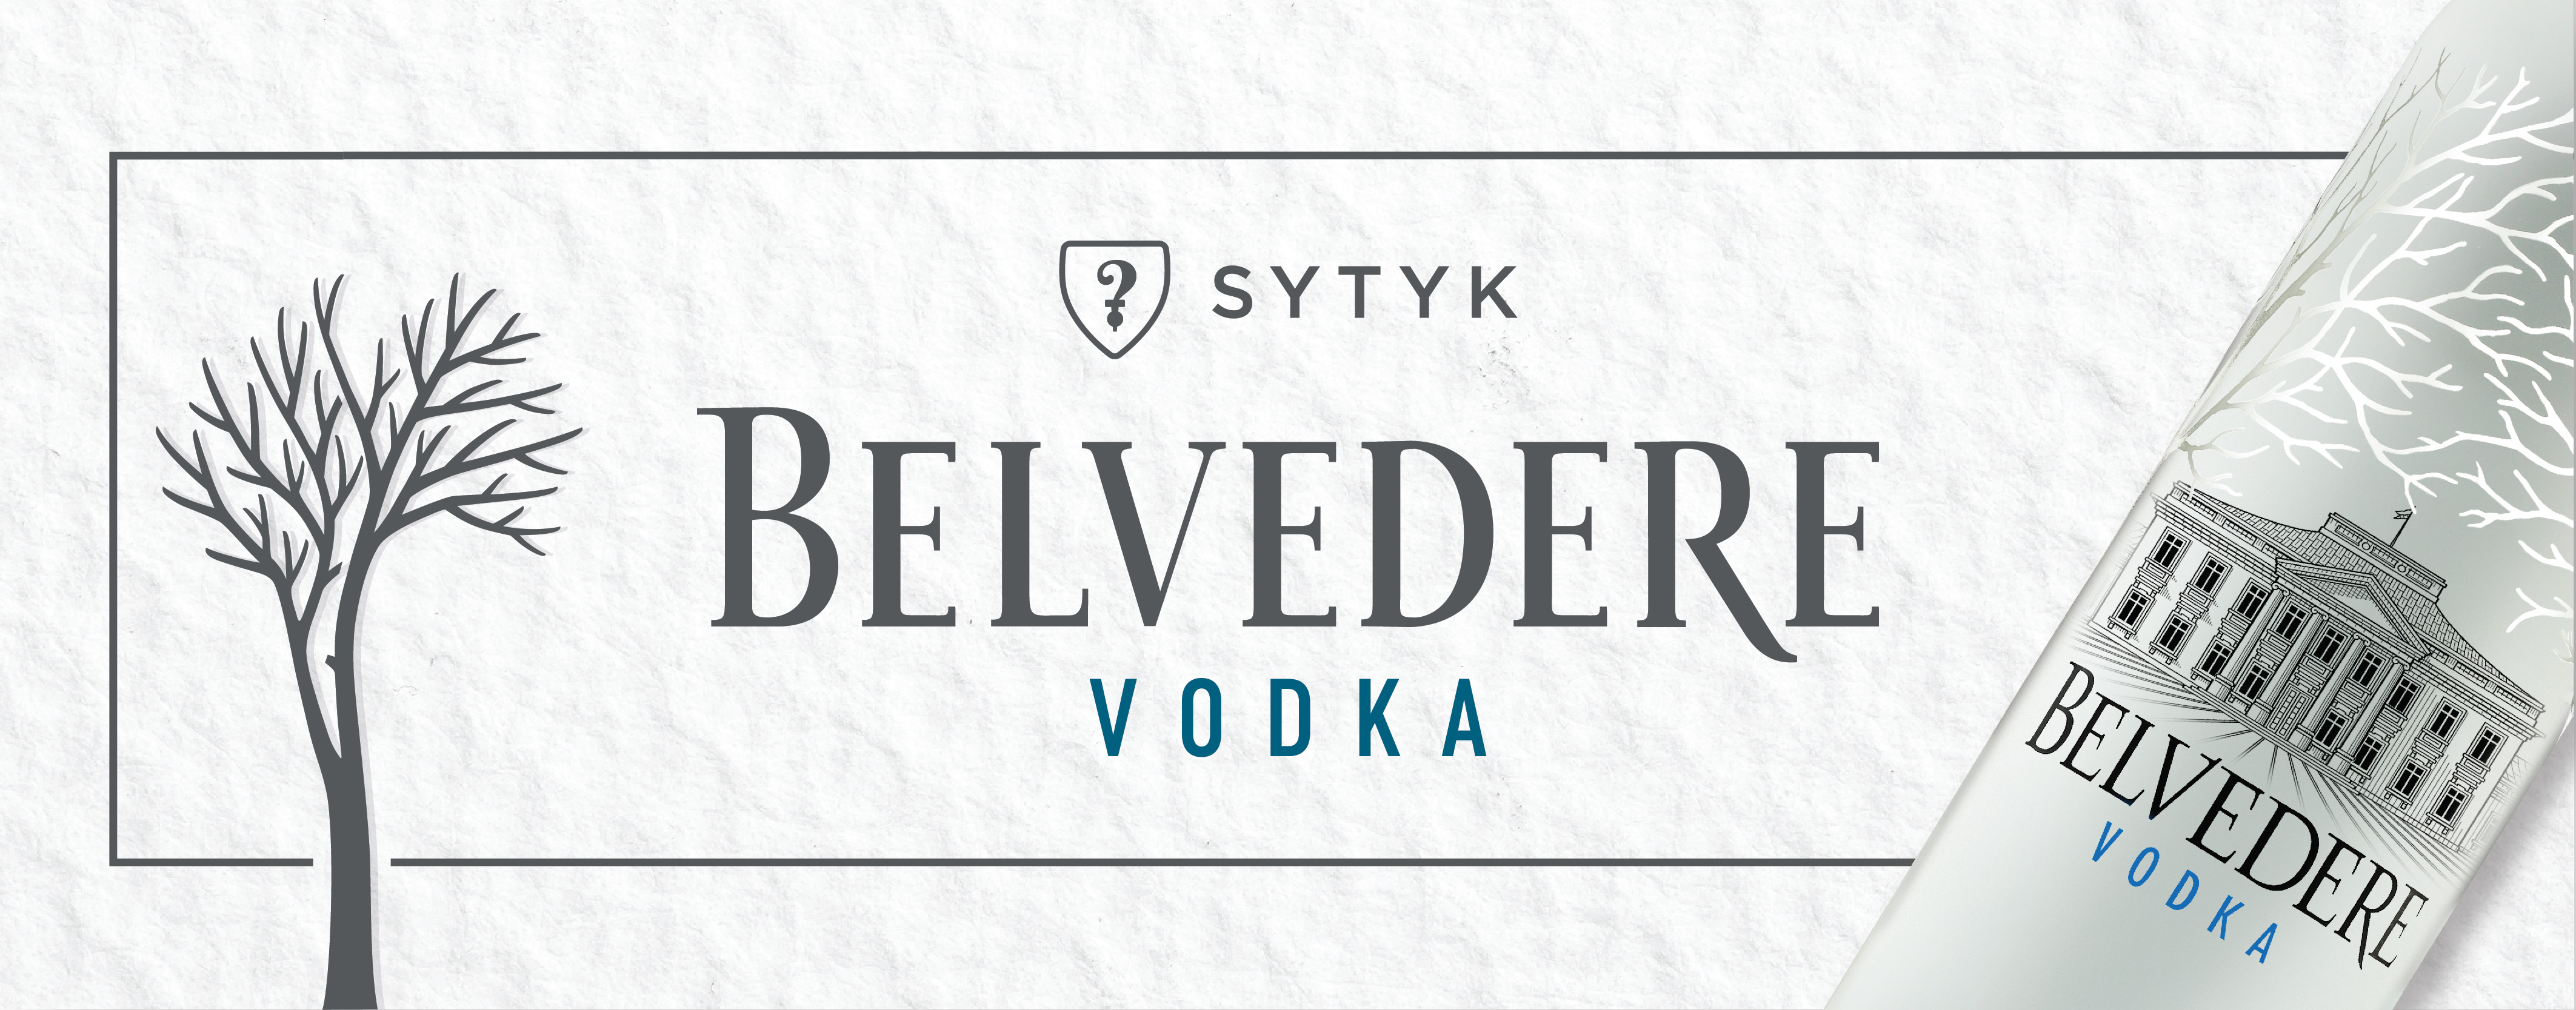 Belvedere • what is BELVEDERE definition 